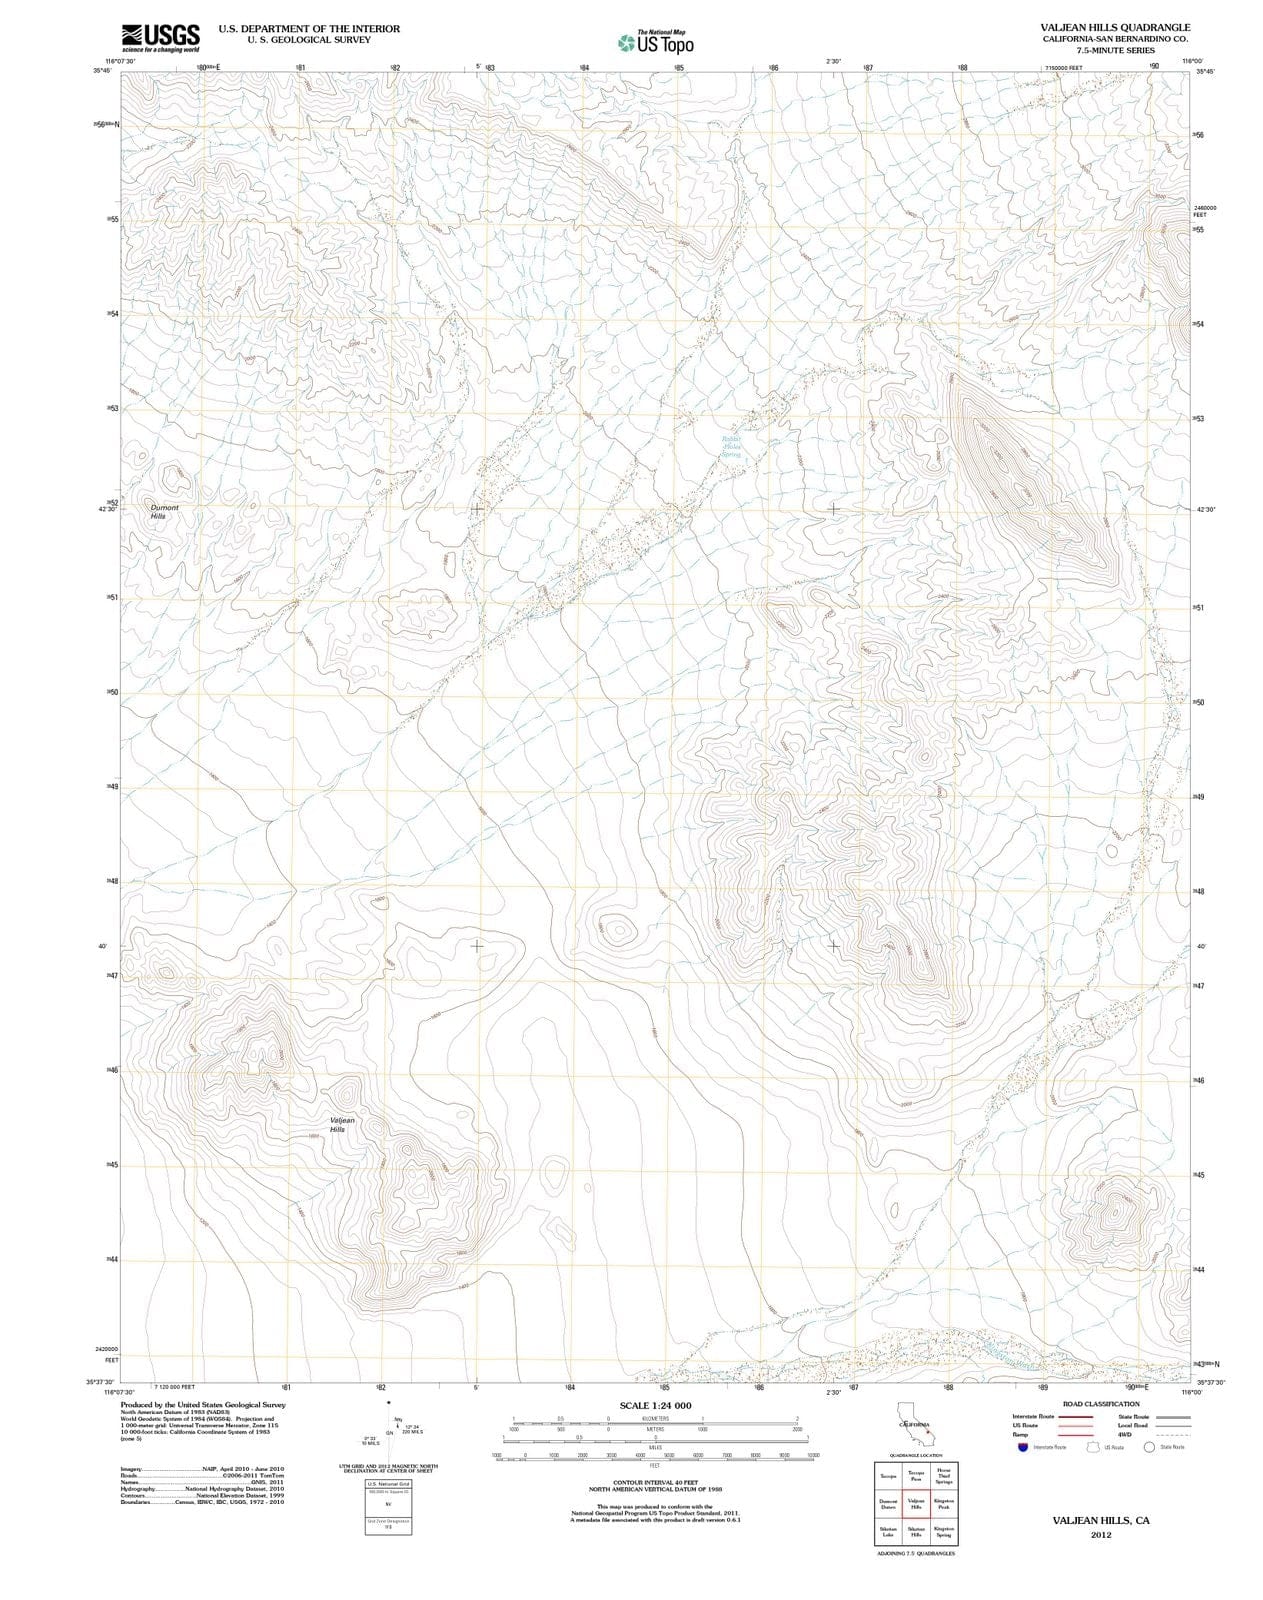 2012 Valjean Hills, CA - California - USGS Topographic Map